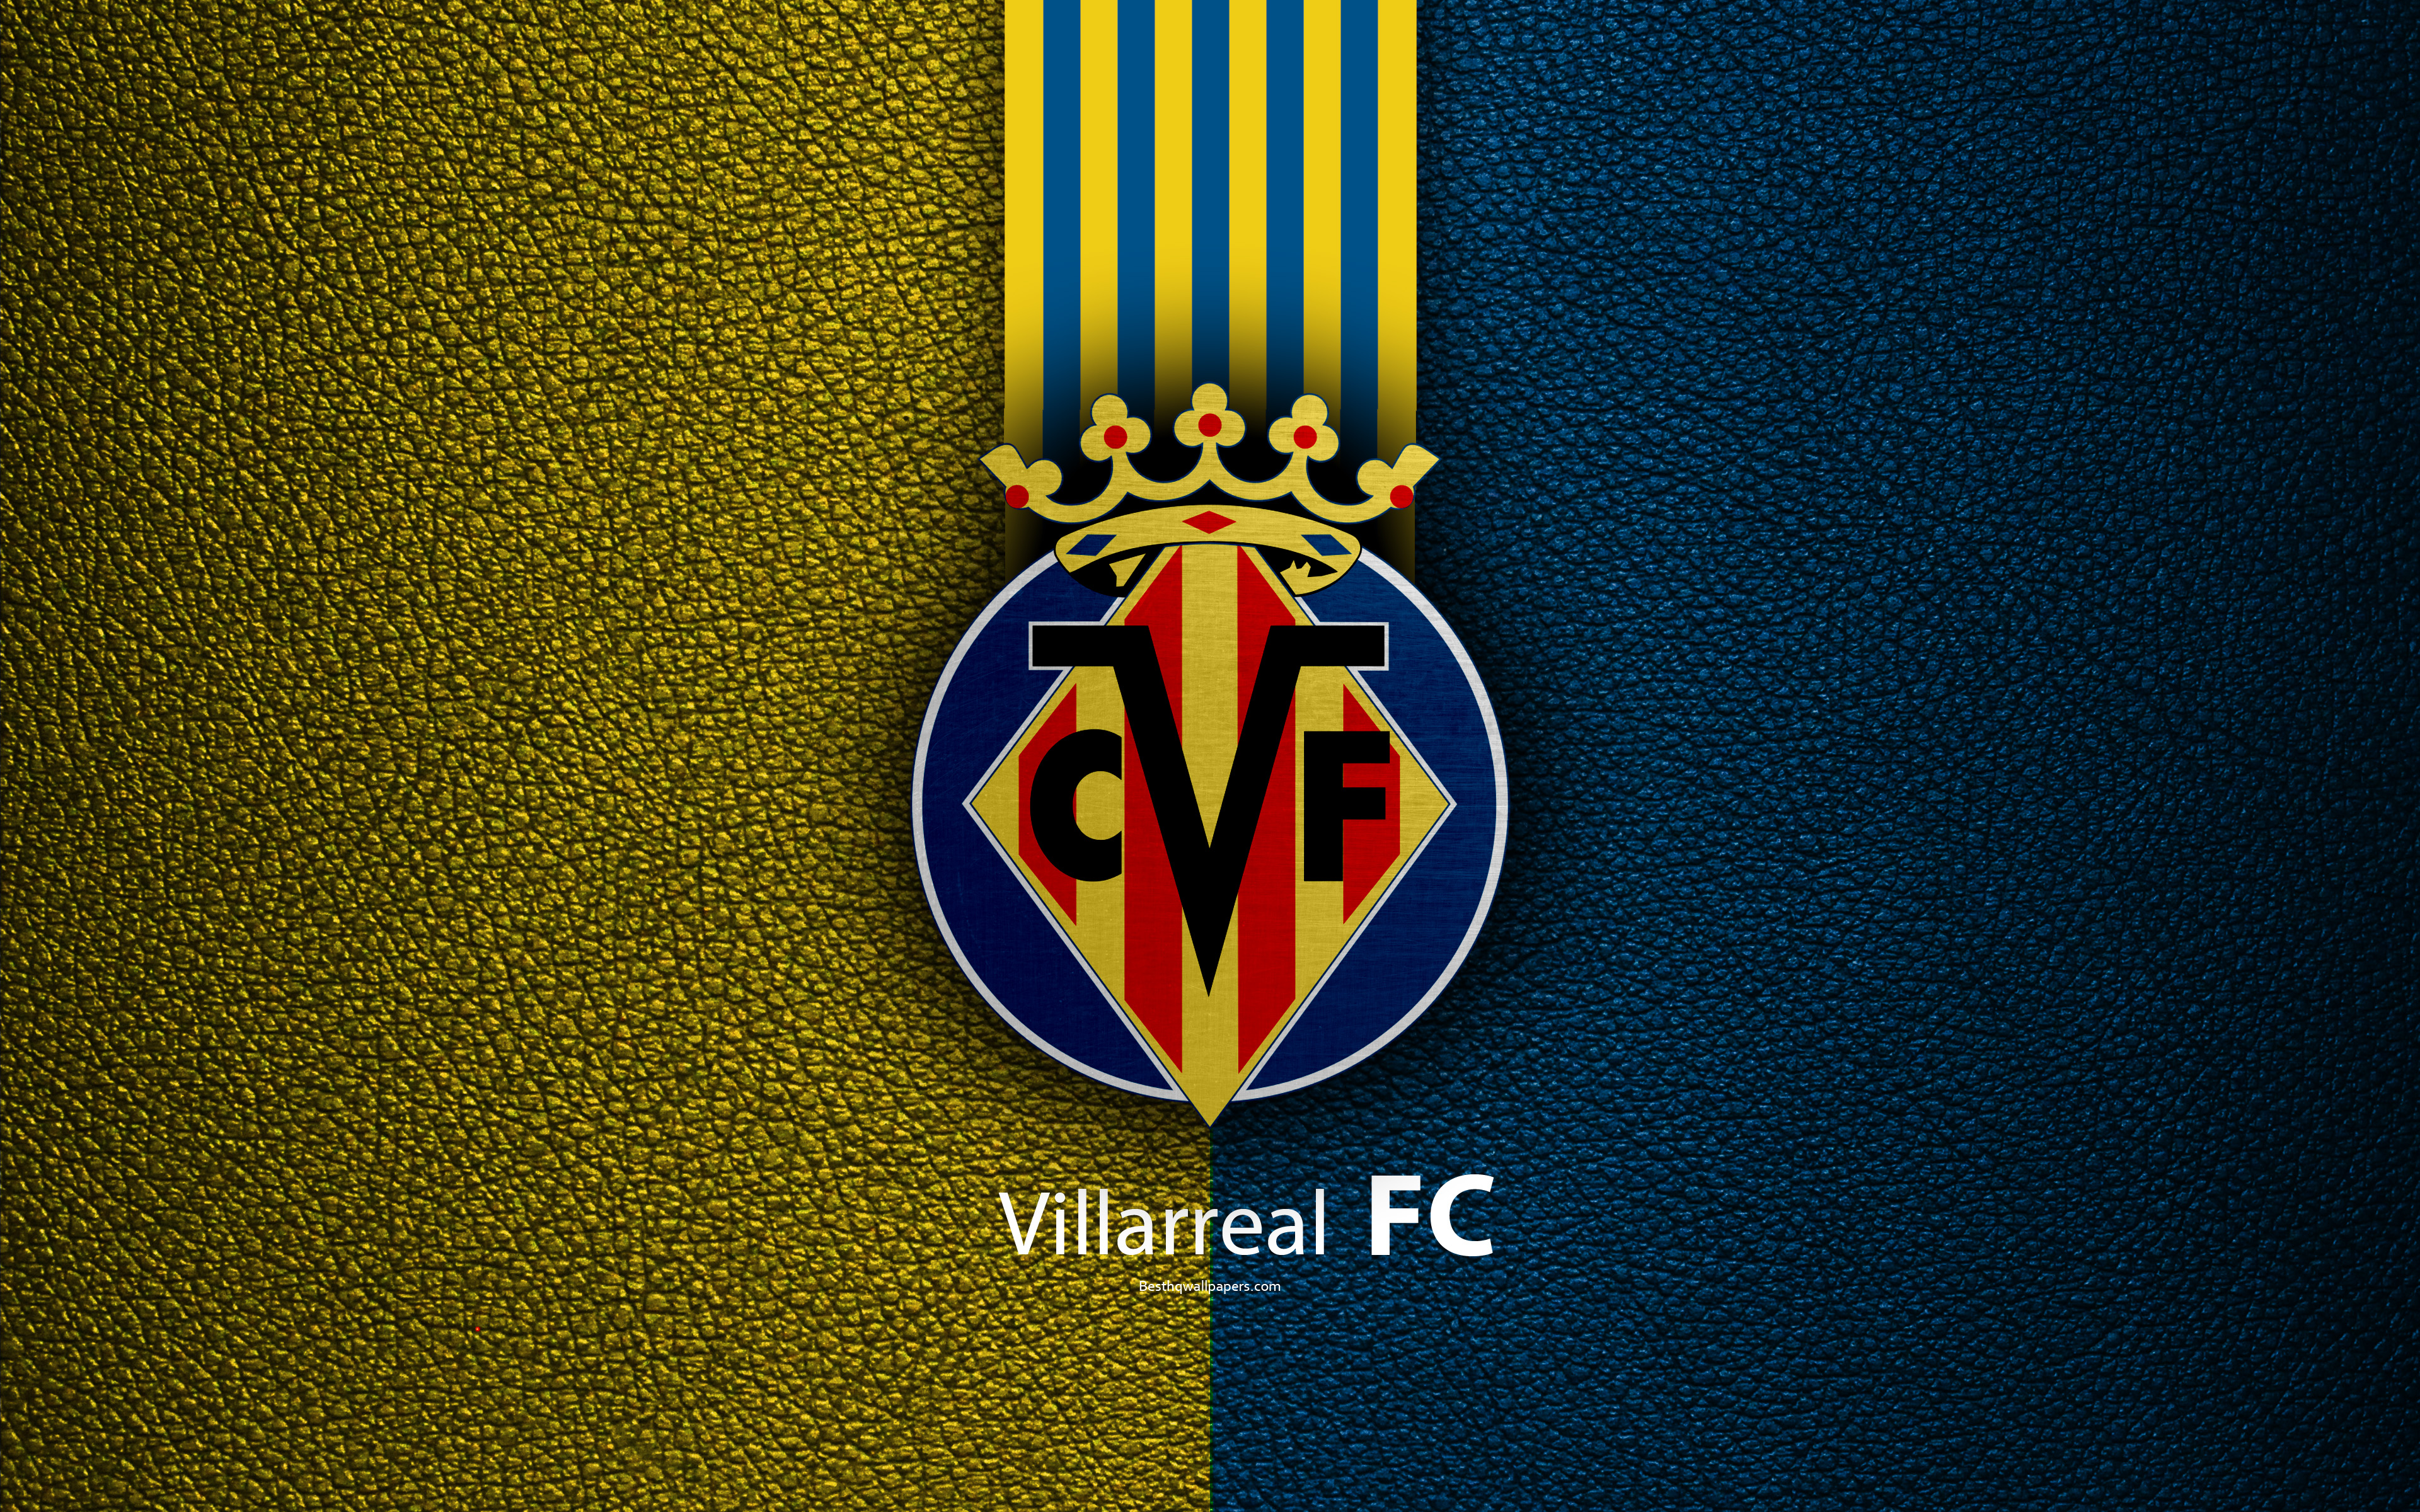 Villarreal Cf 4k Ultra HD Wallpaper Background Image